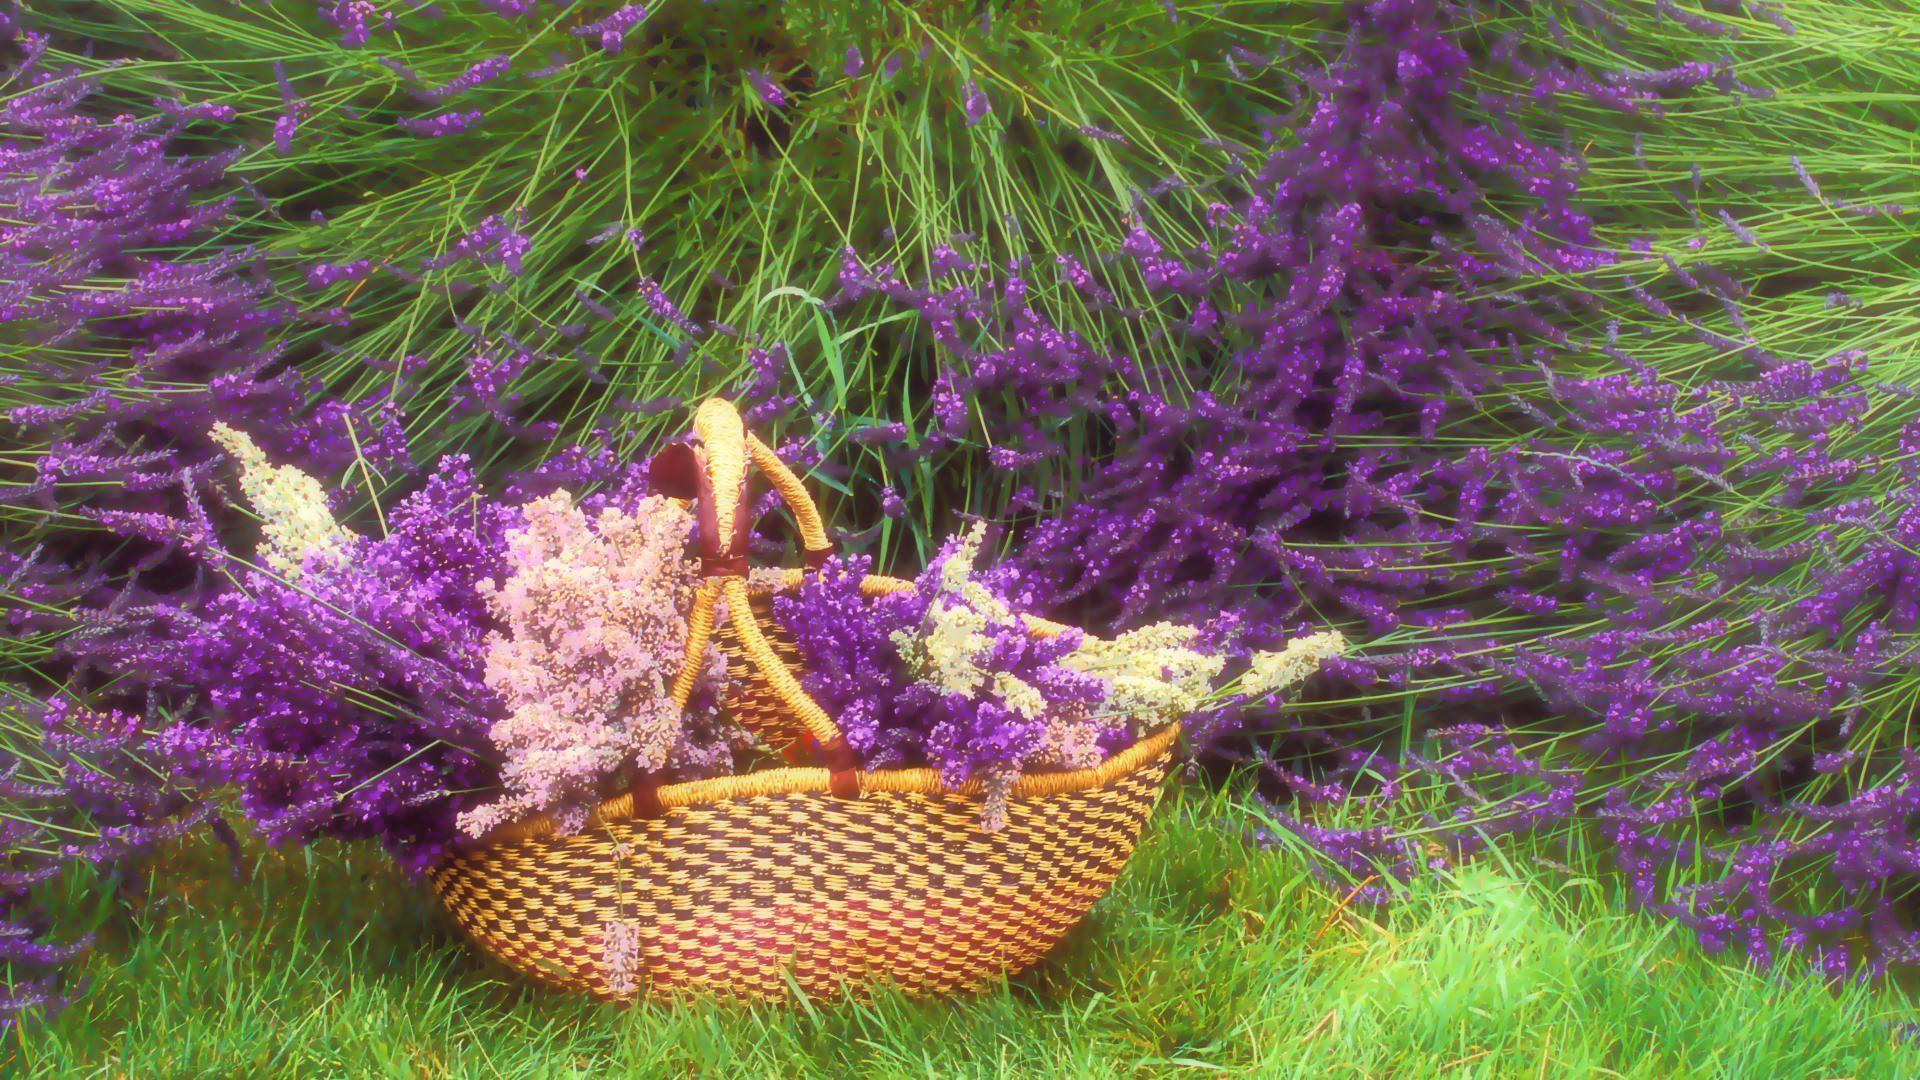 Basket of lavender HD Wallpaper. Download HD Wallpaper for Desktop